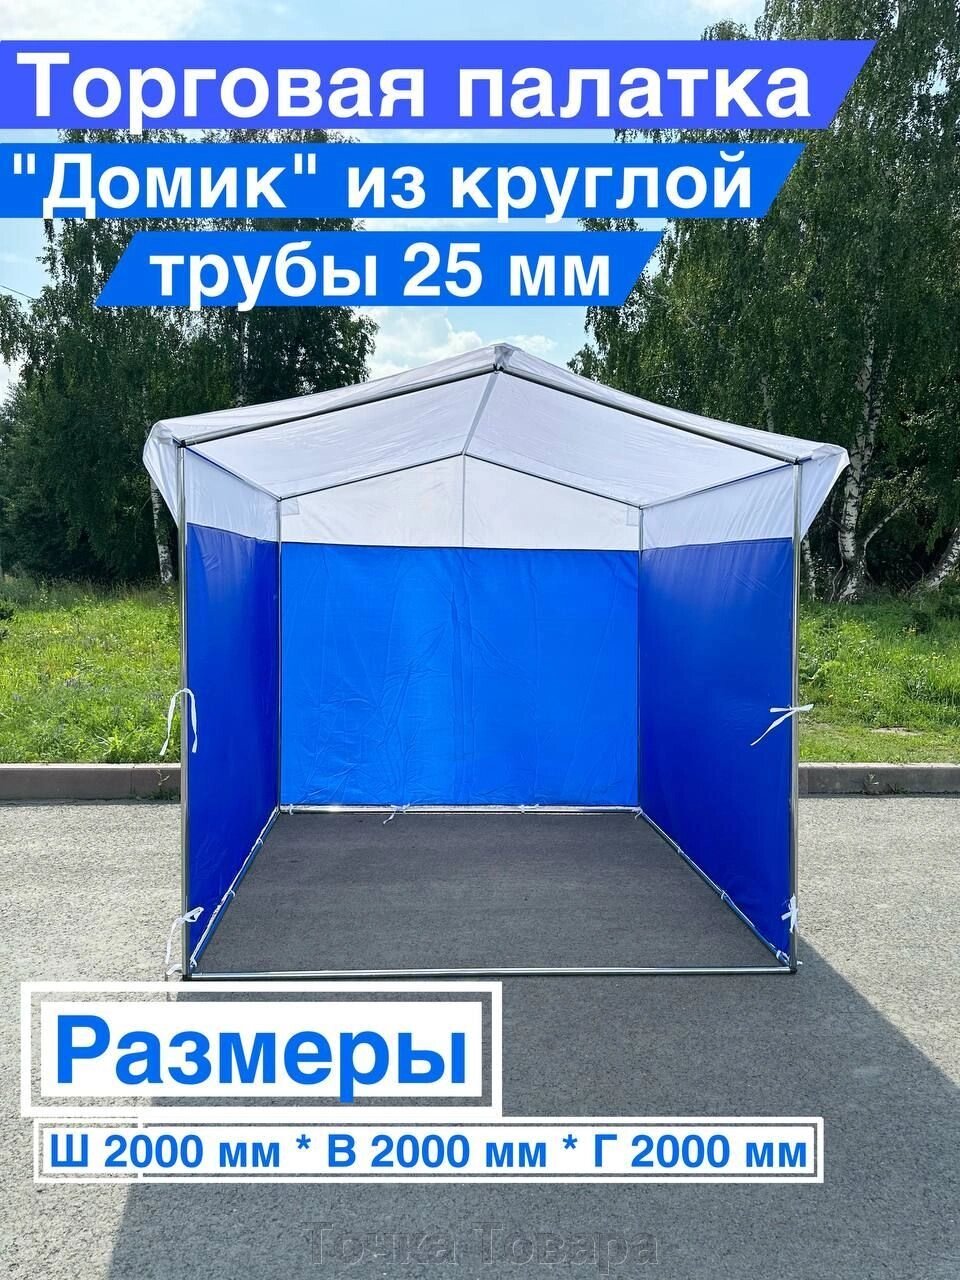 Палатка Торговая 2х2м на металлическом каркасе с тентом от компании Точка Товара - фото 1